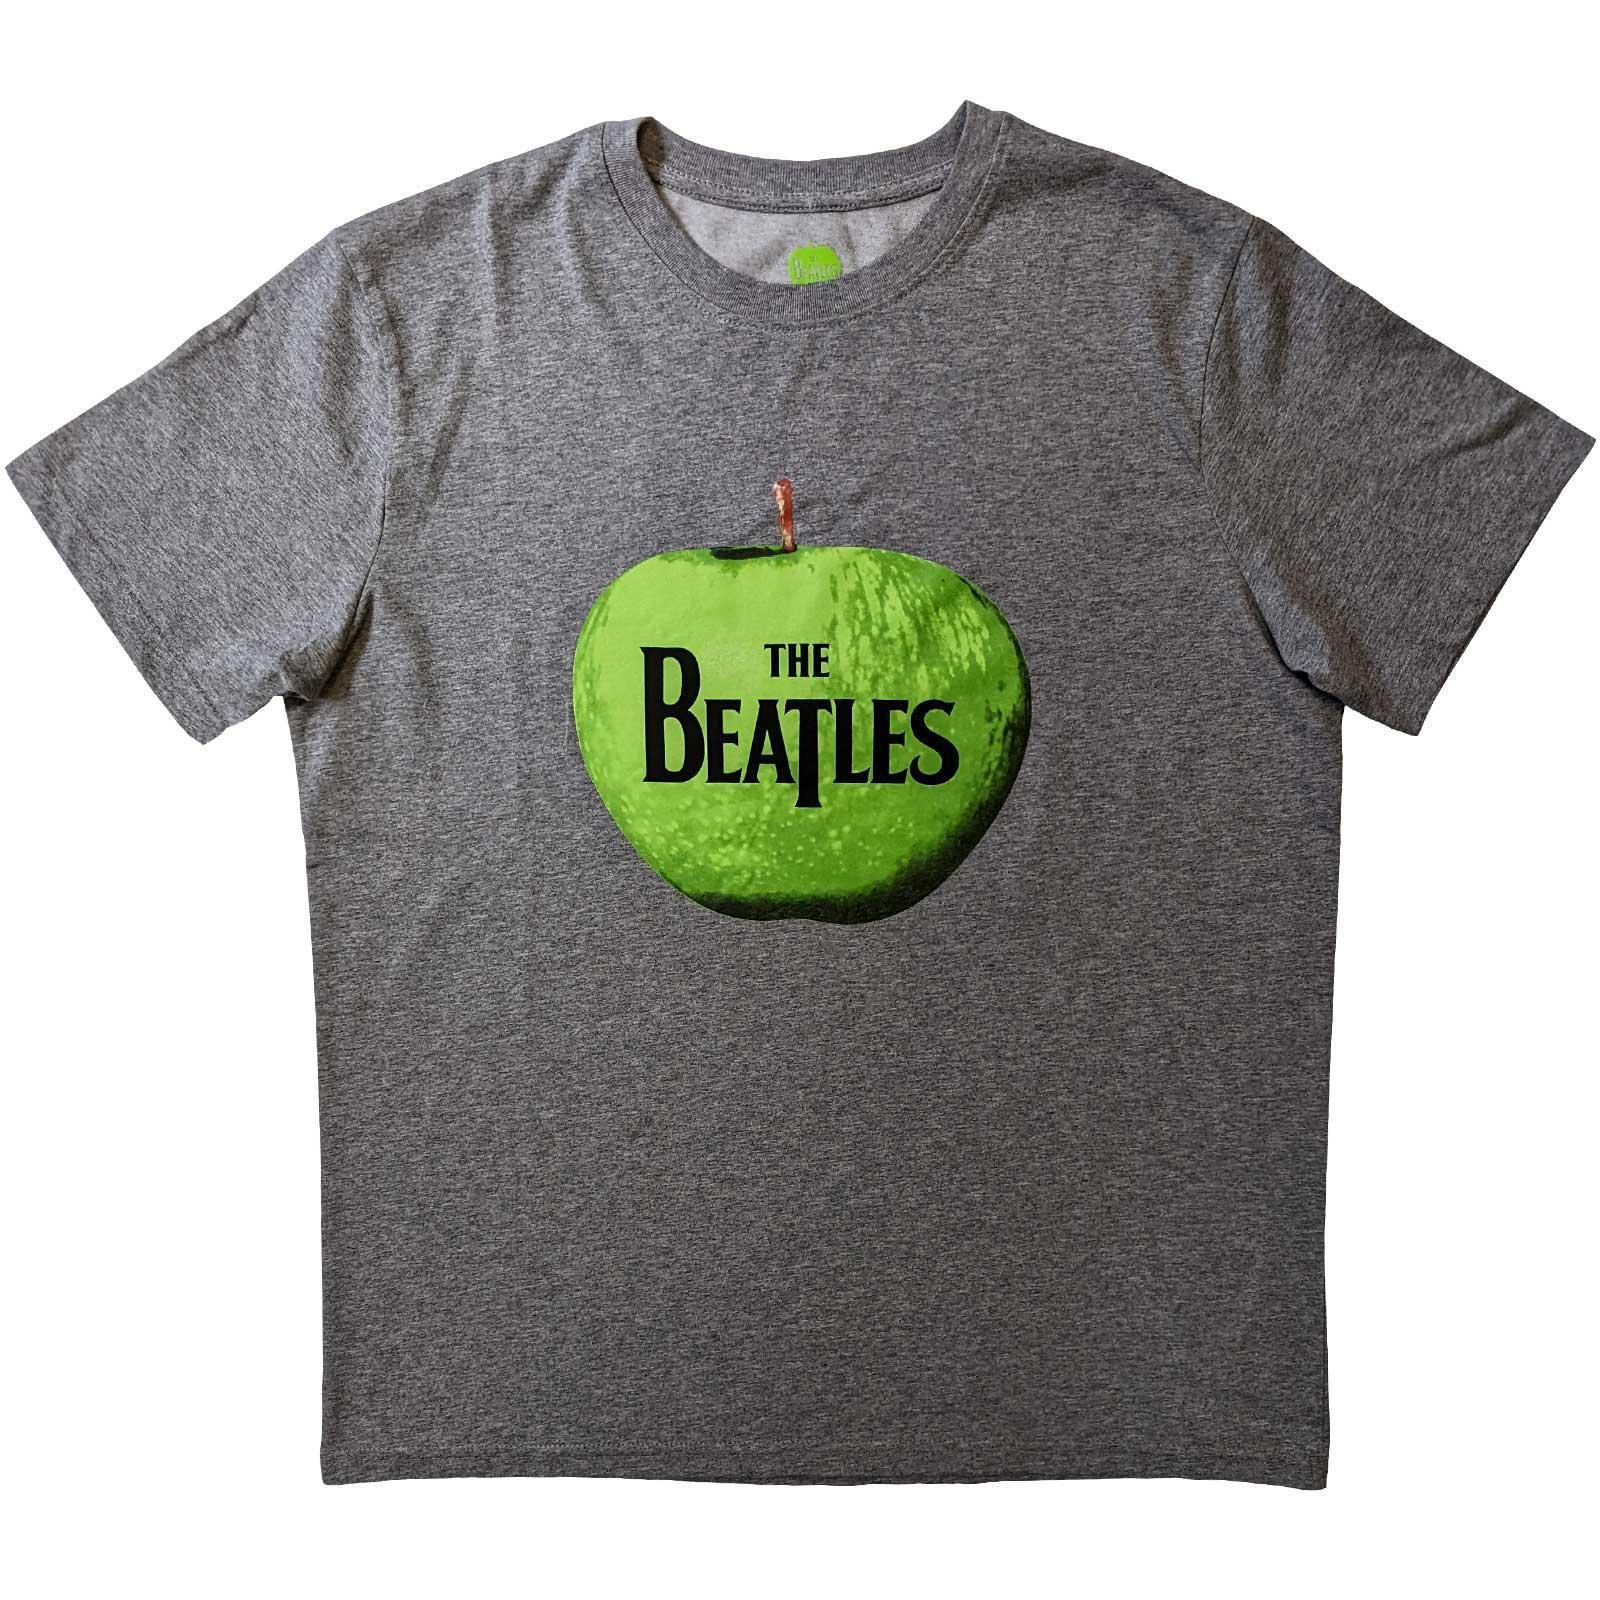 The Beatles Unisex Adult Apple Cotton T-Shirt (Grey) (M)